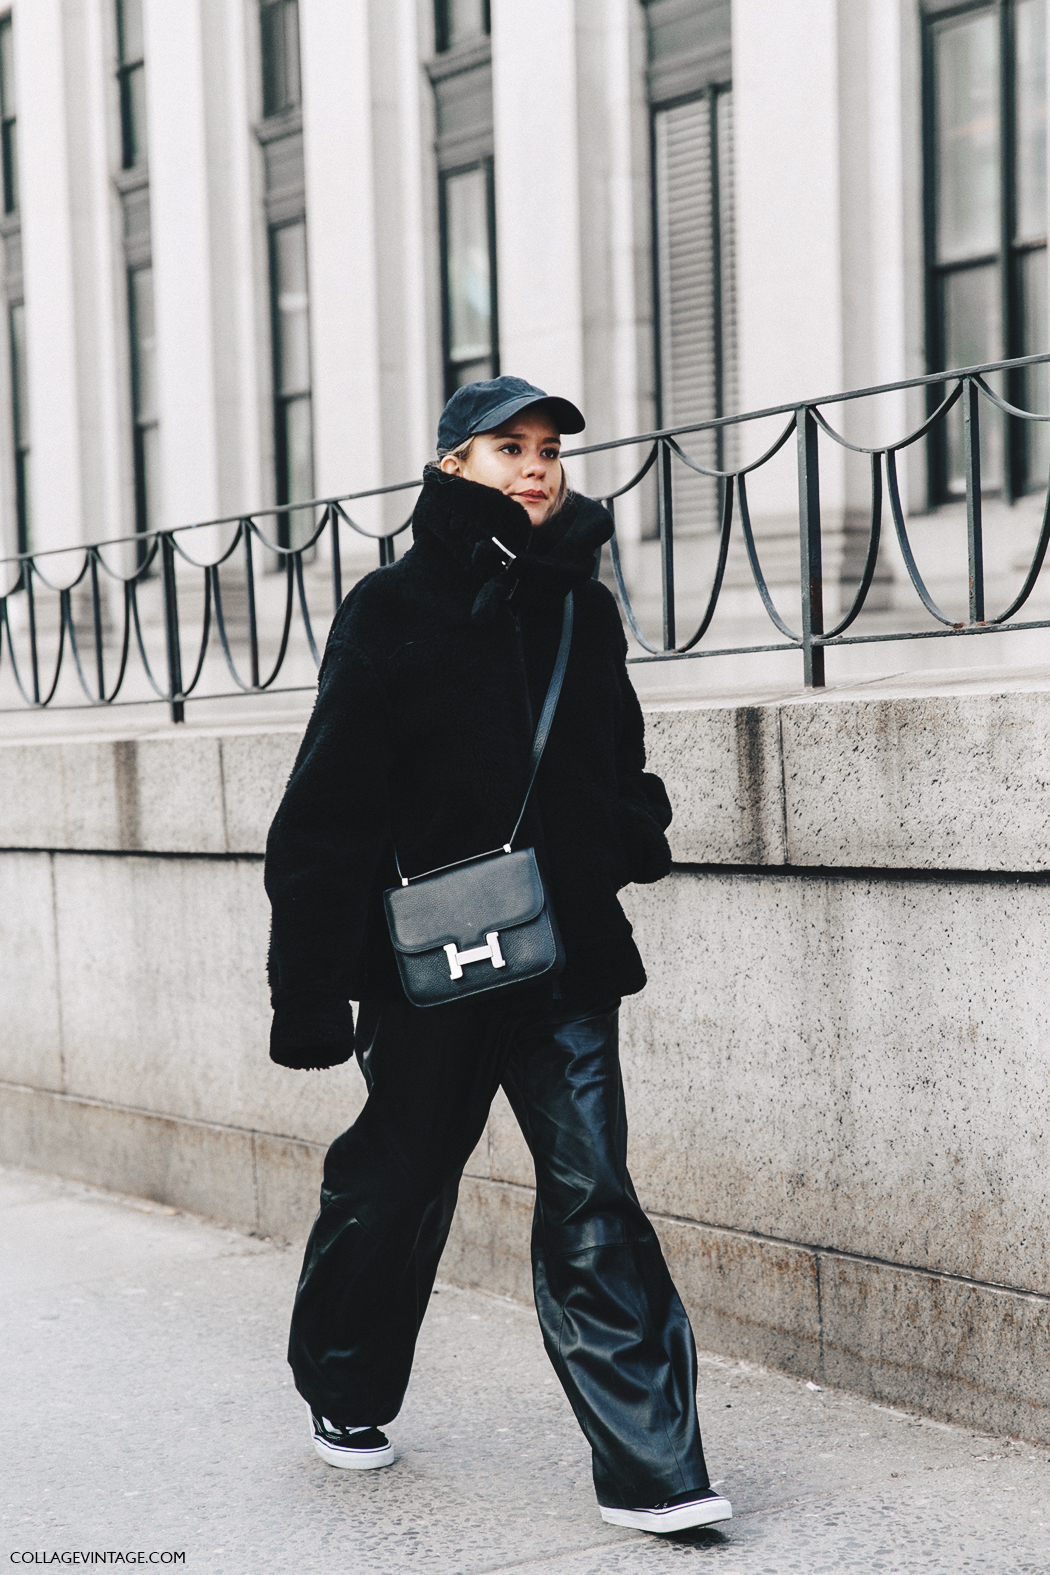 NYFW-New_York_Fashion_Week-Fall_Winter-17-Street_Style-Total_Black-Leather_Trousers-Fur_Jacket-Cap-Hermes_Bag.